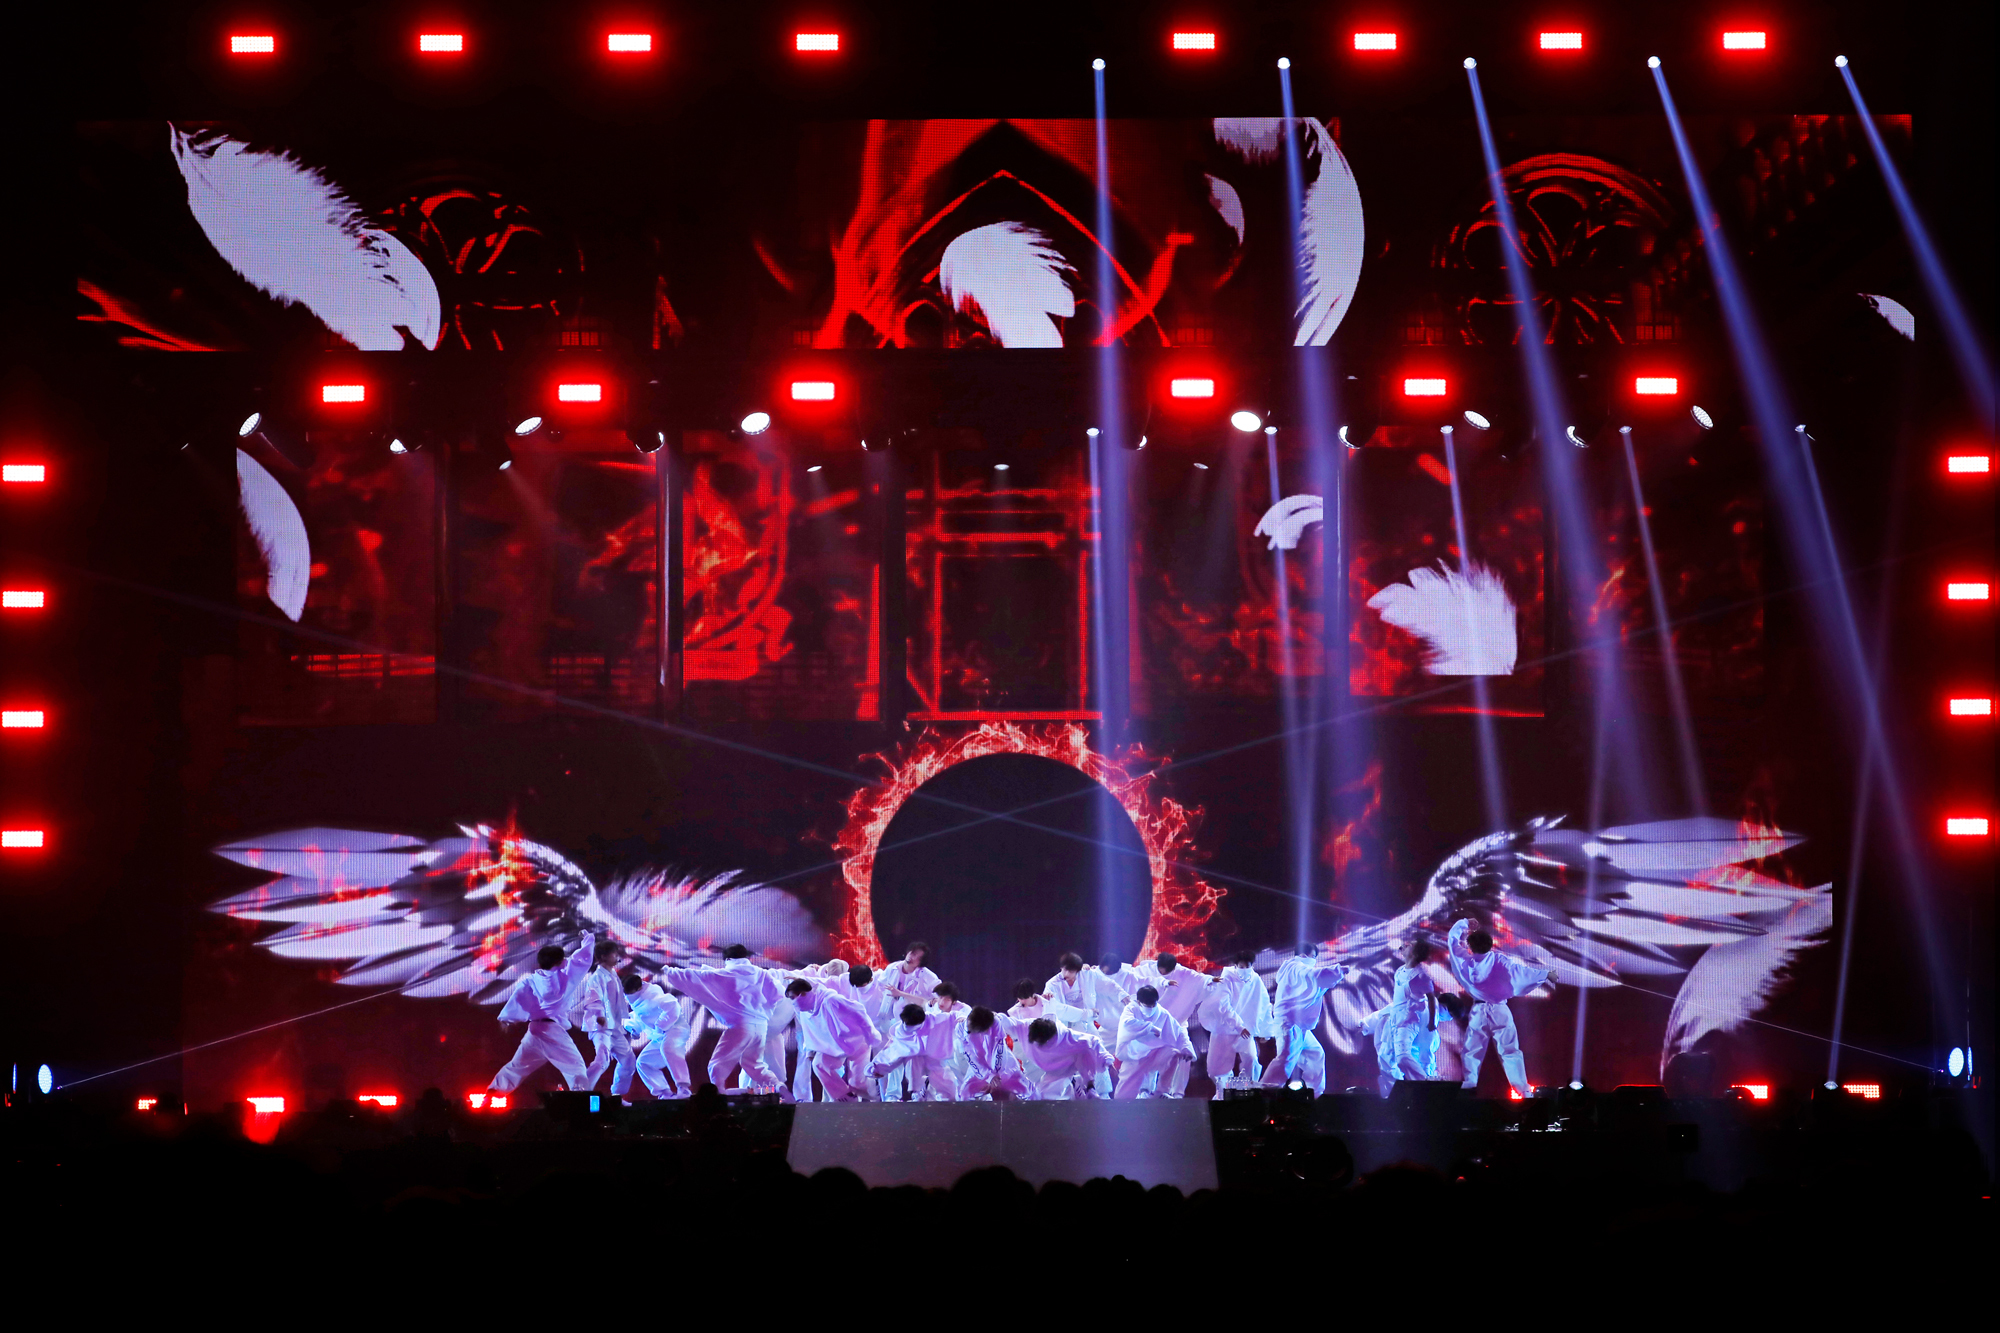 『ENHYPEN WORLD TOUR ‘MANIFESTO’ in JAPAN』